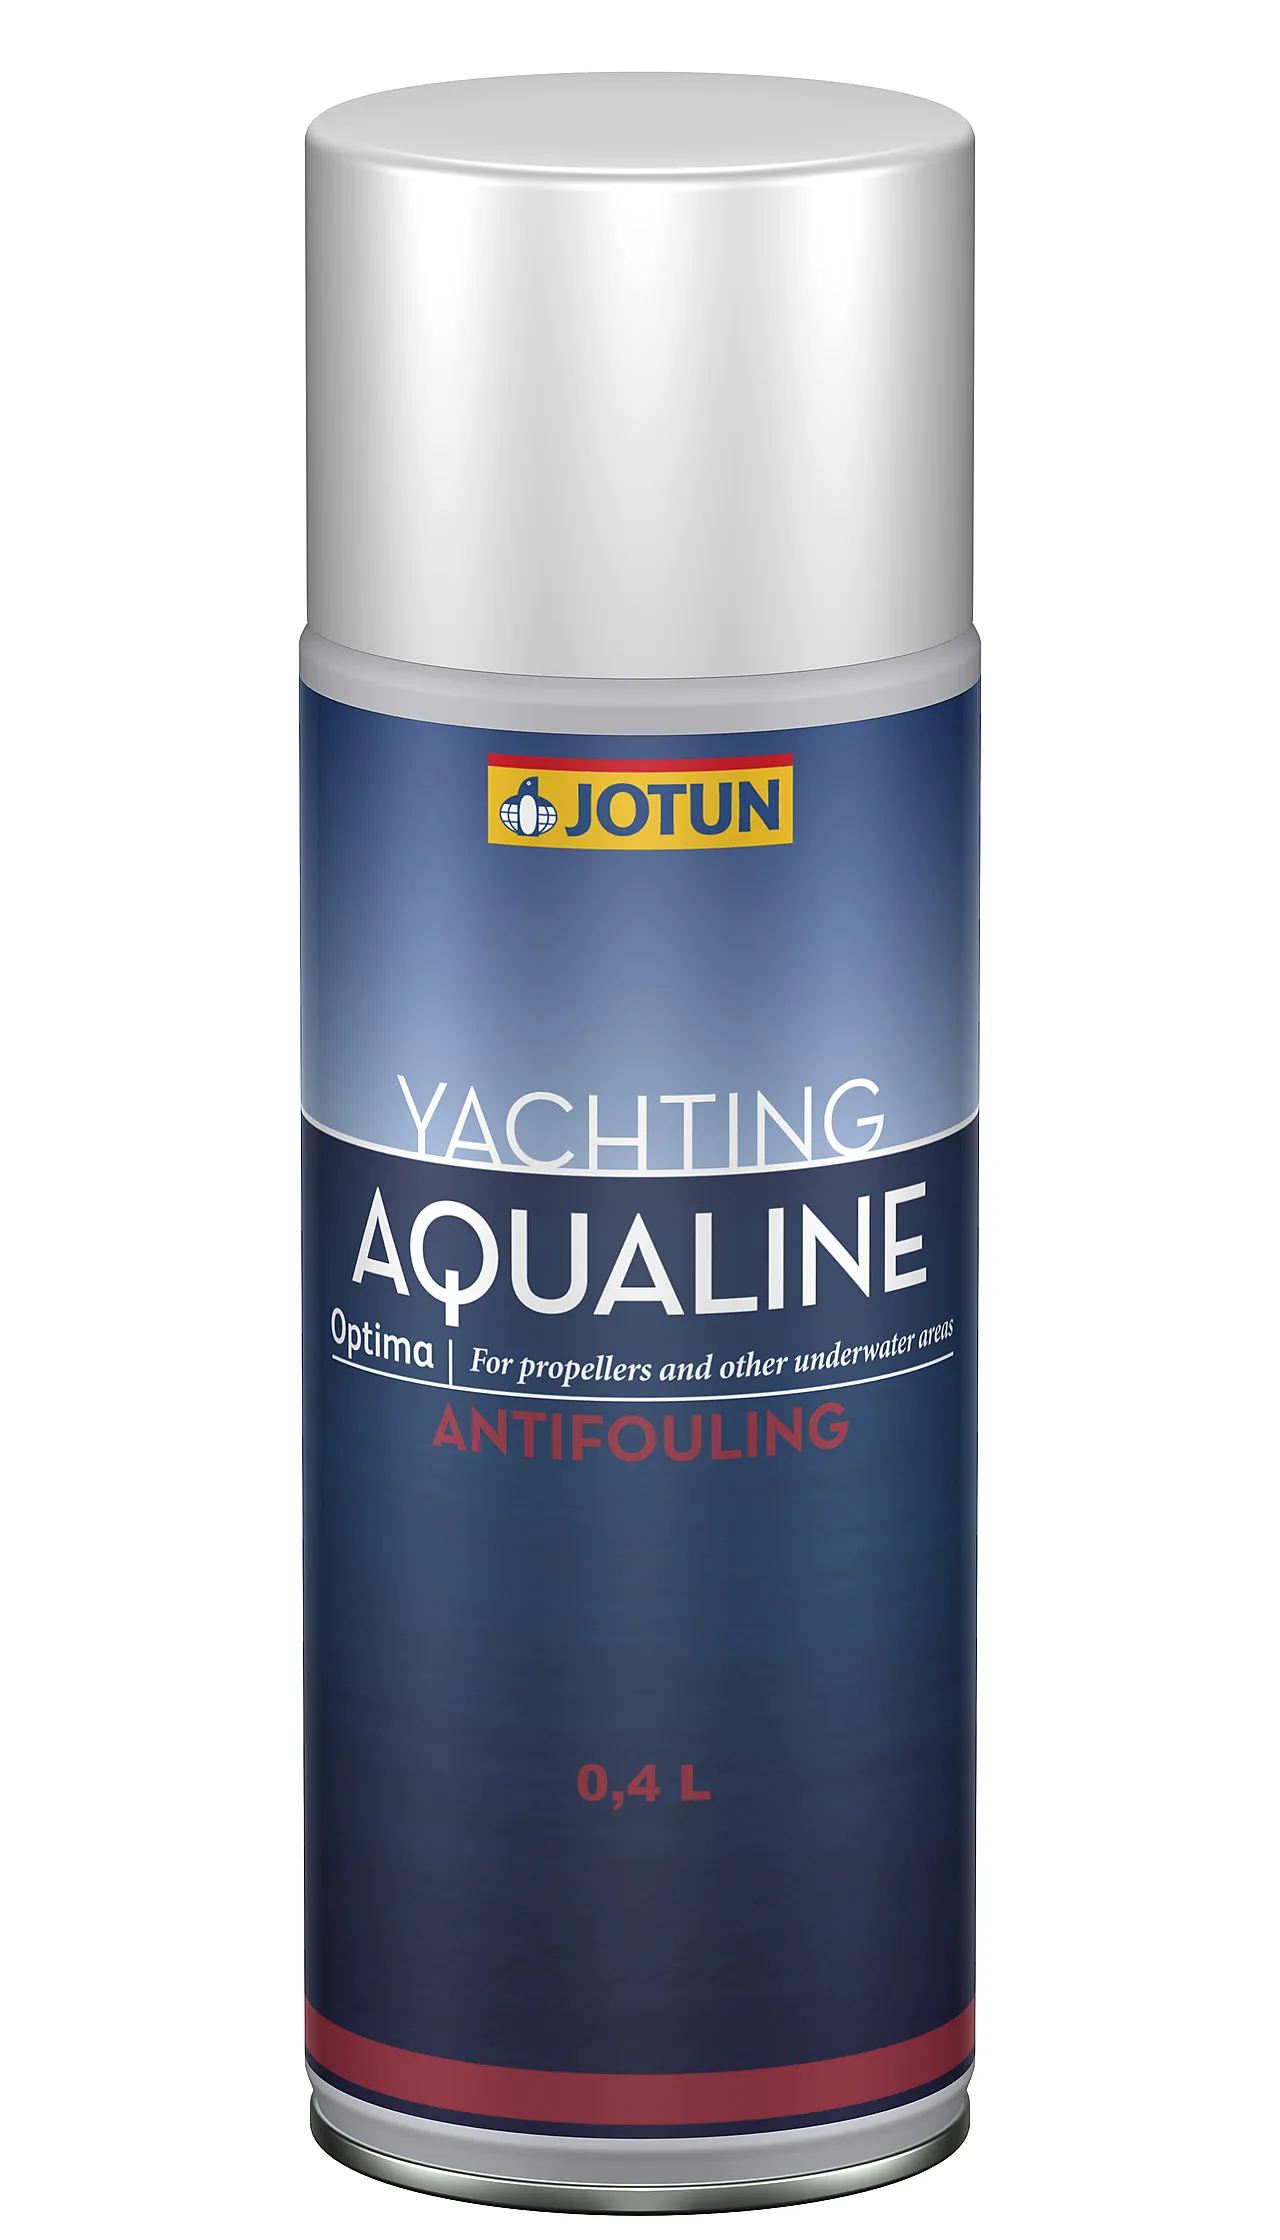 Aqualine optima grey      0.4ljotun